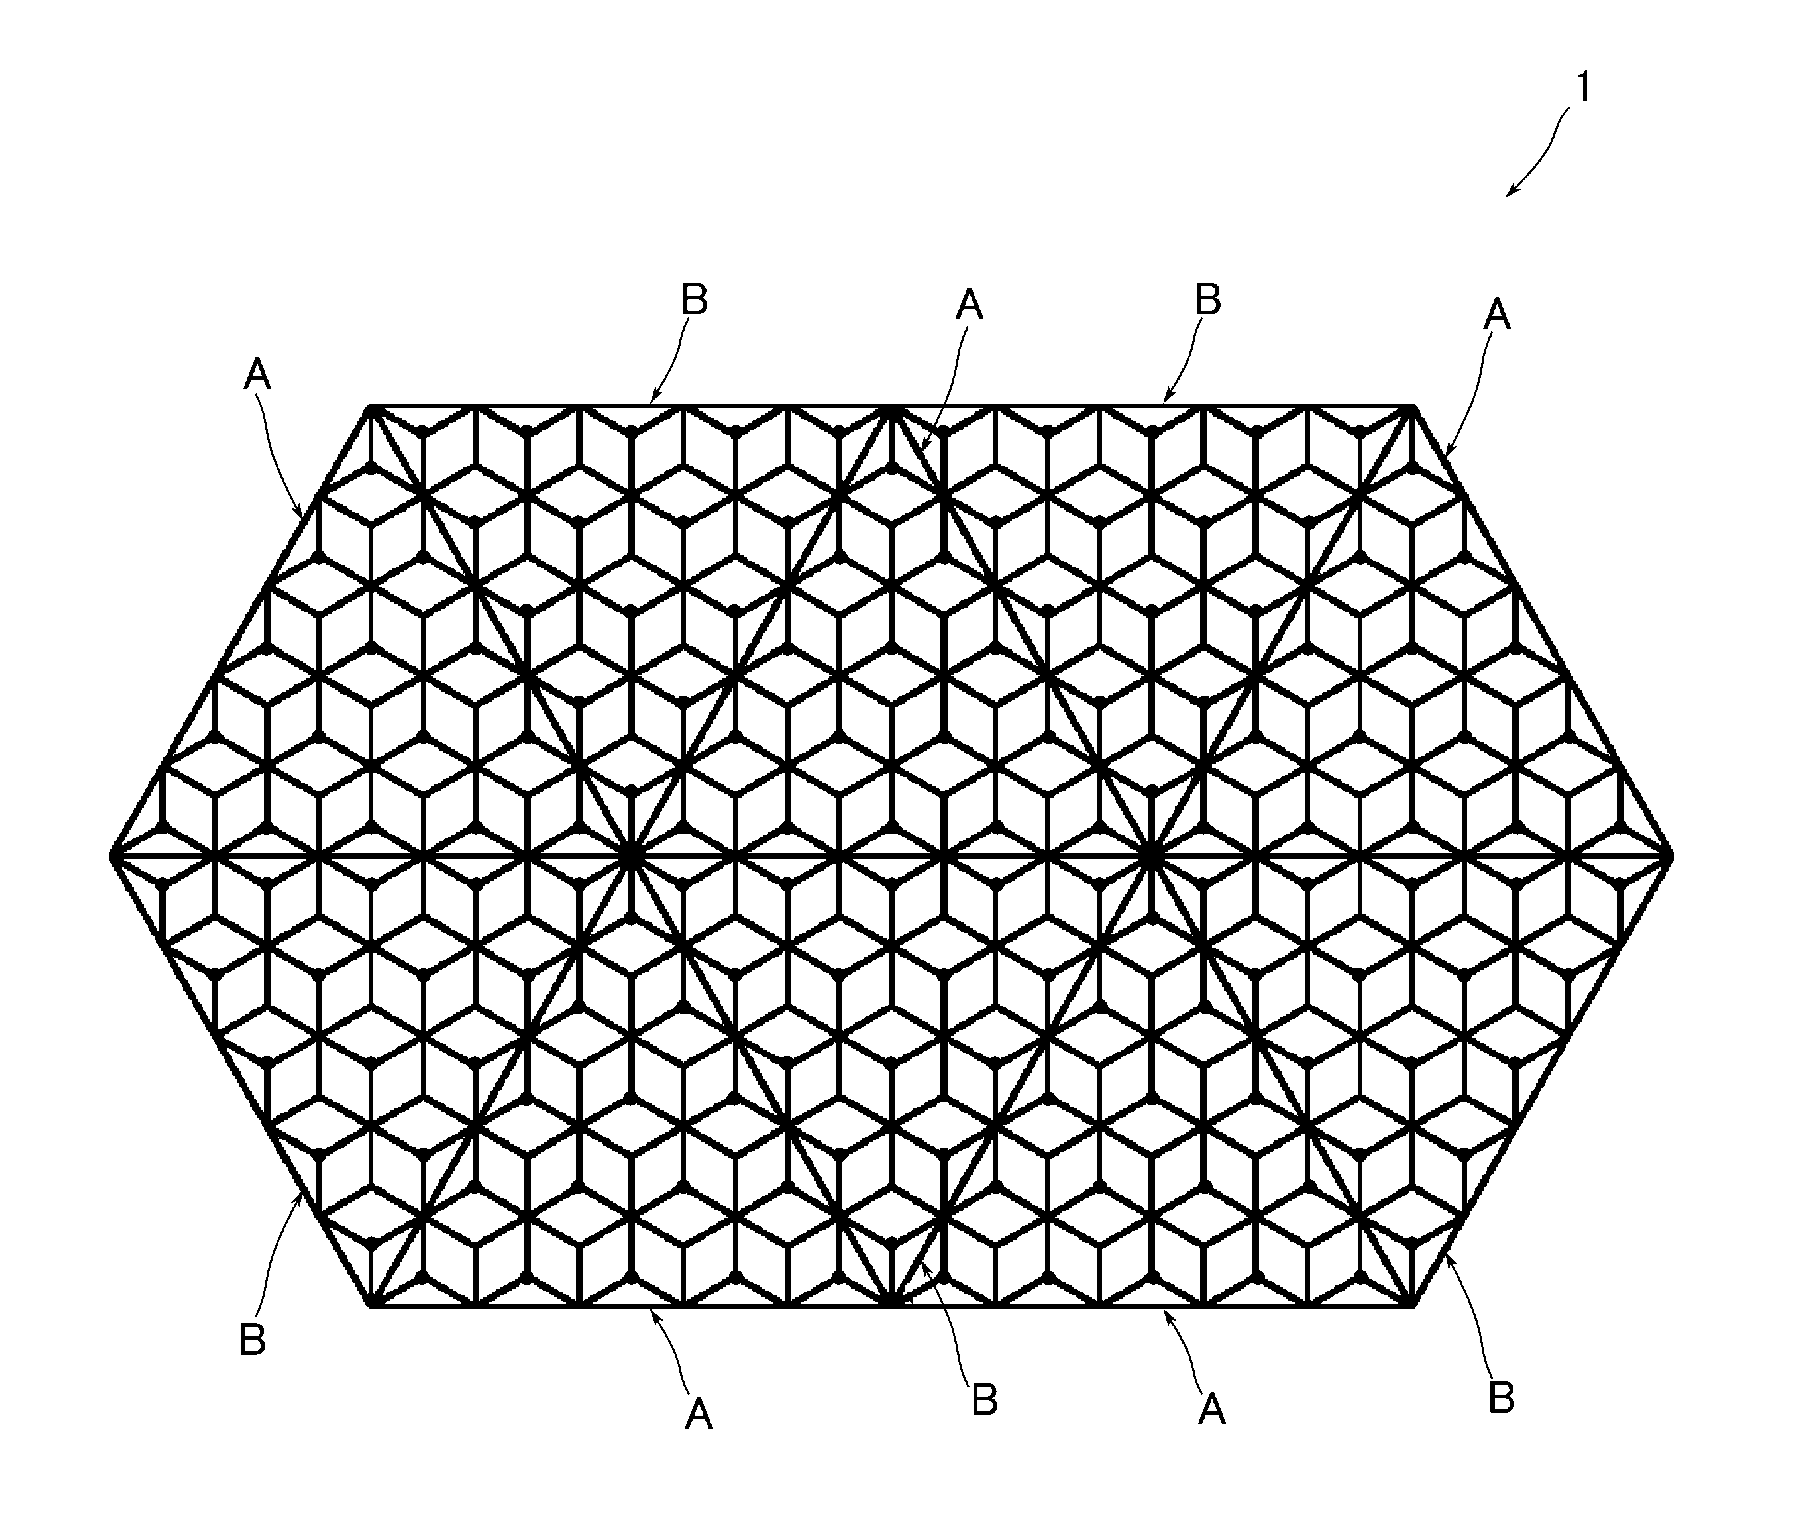 Cube-corner retroreflective sheeting